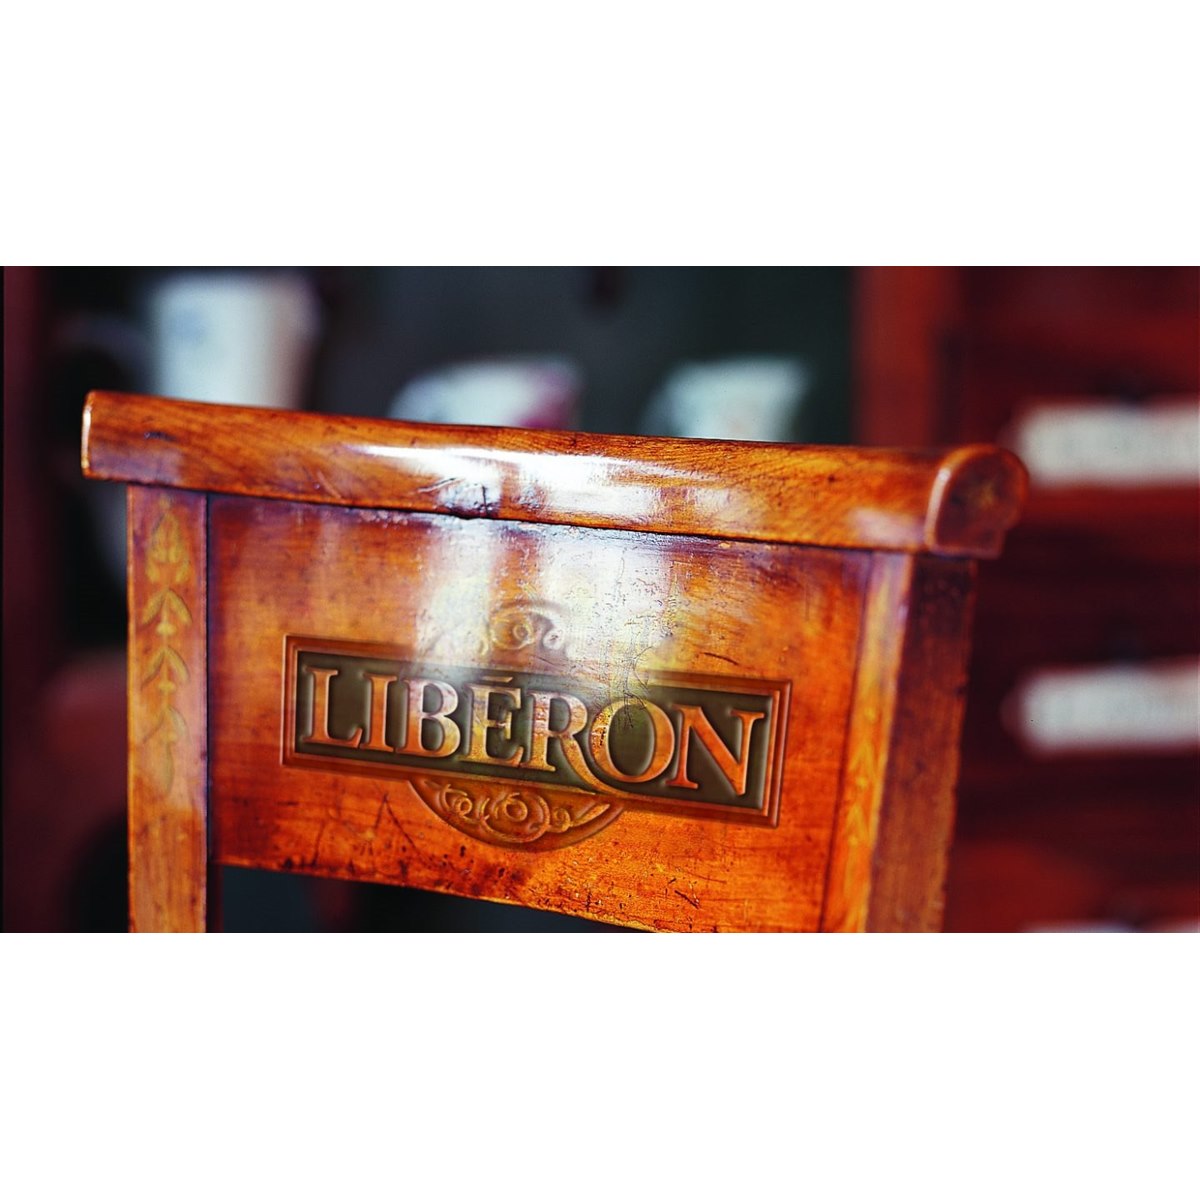 Where to buy Liberon Black Bison Furniture Wax